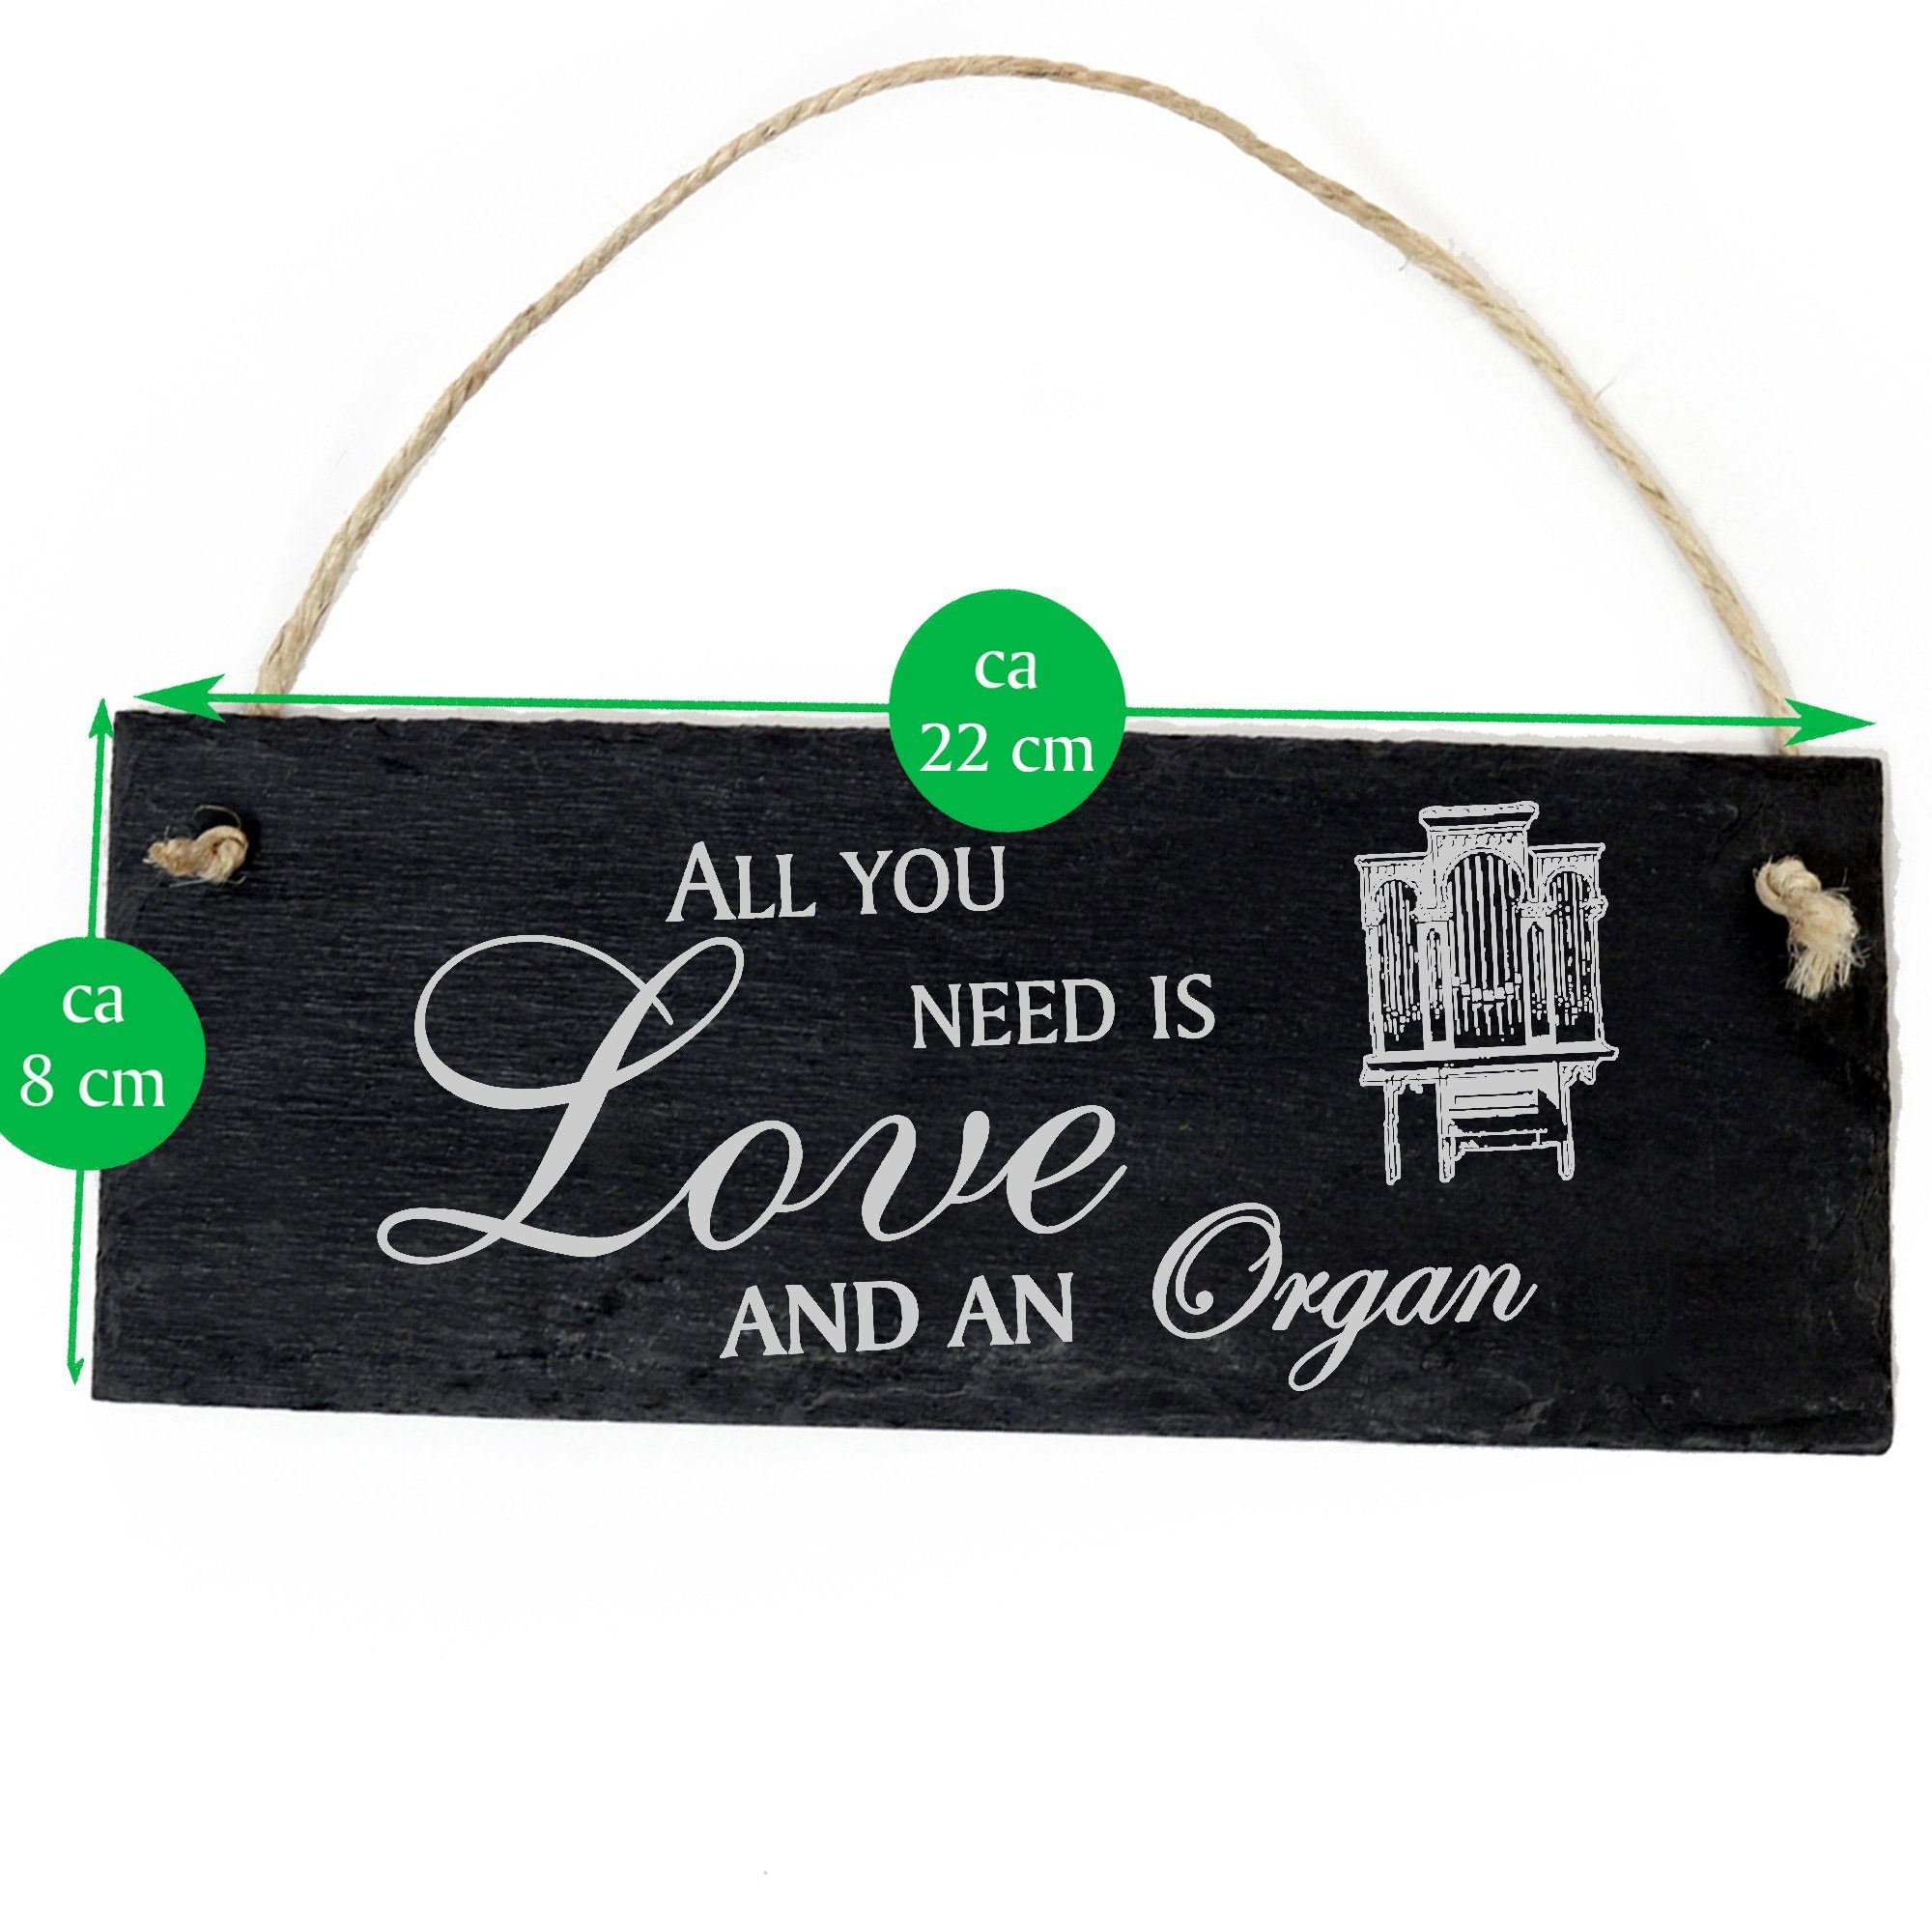 an Orgel 22x8cm Hängedekoration Organ need Dekolando is and Love you All